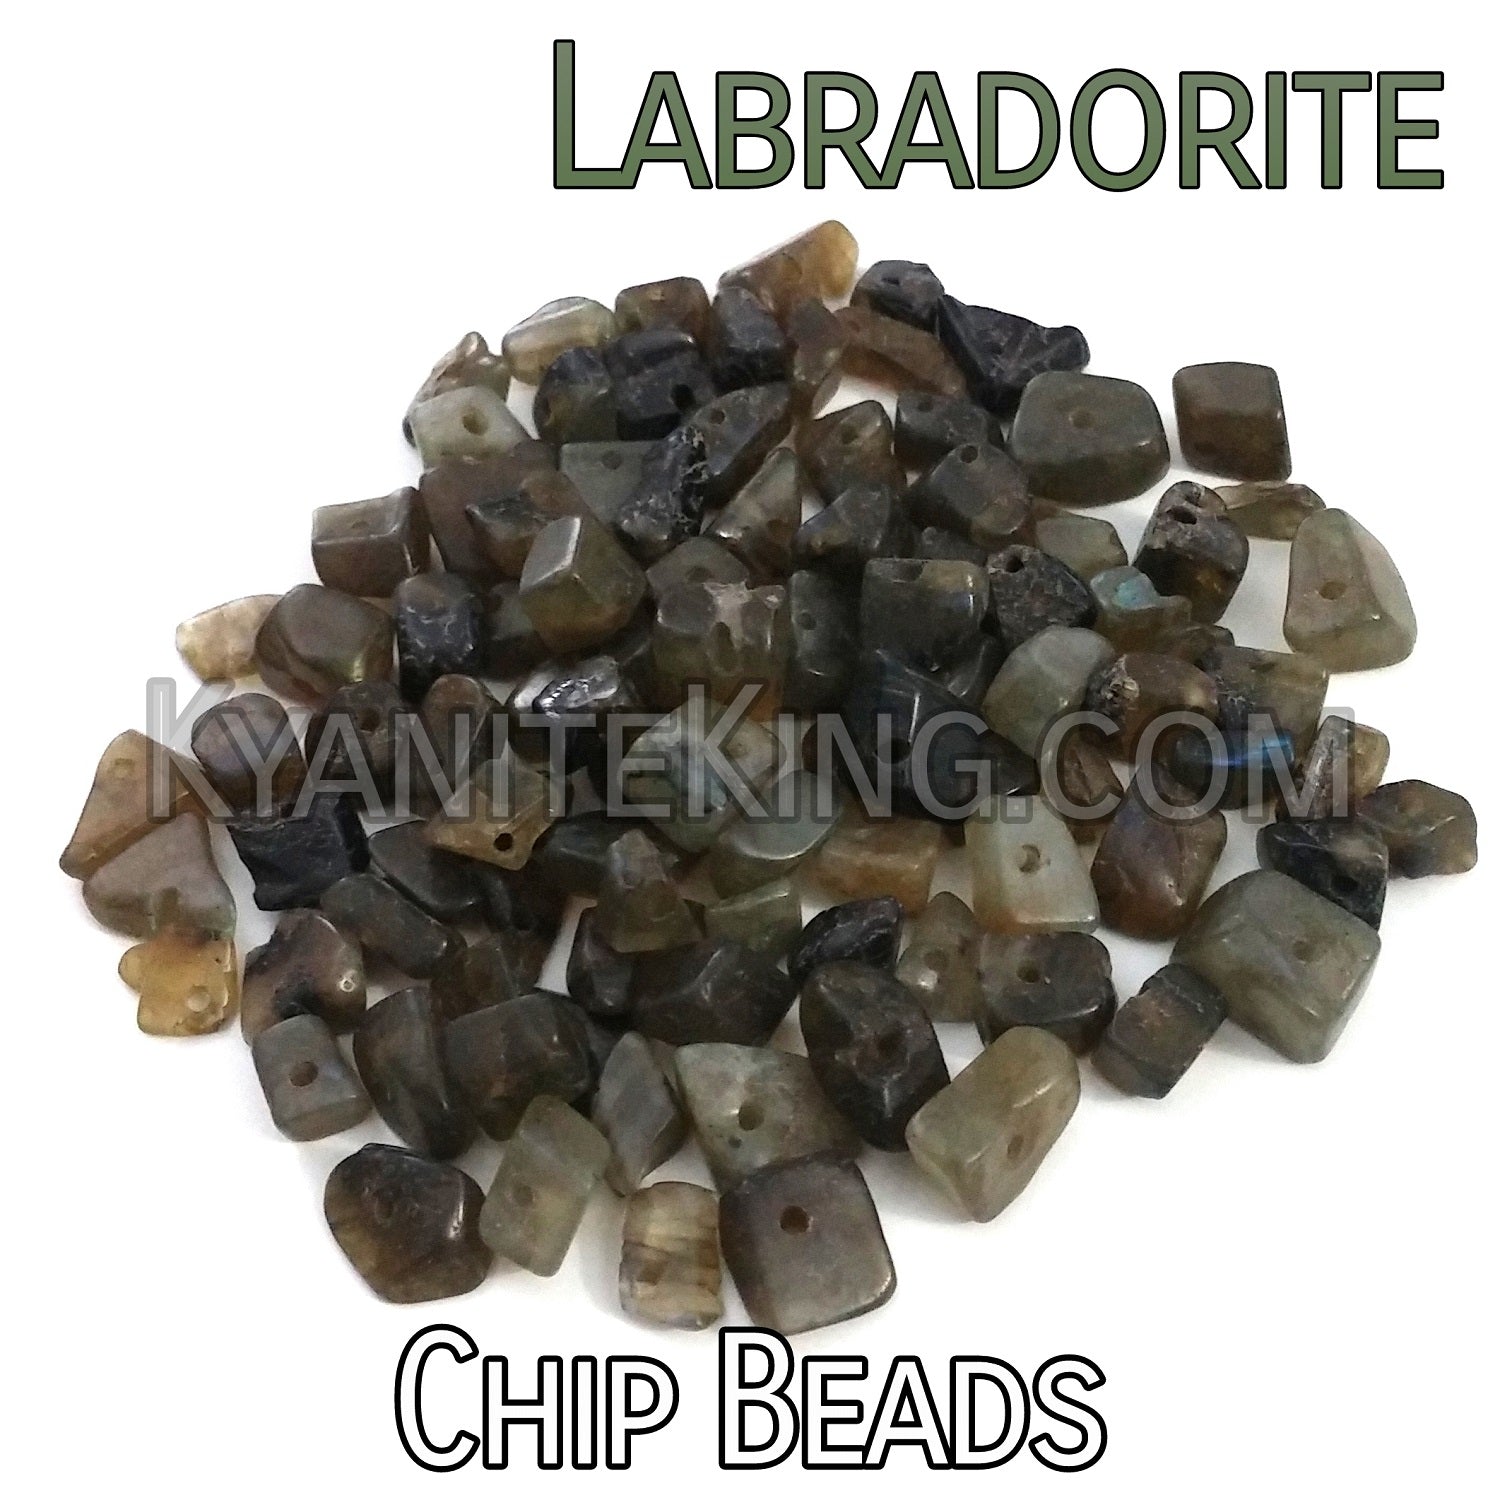 Labradorite chip group